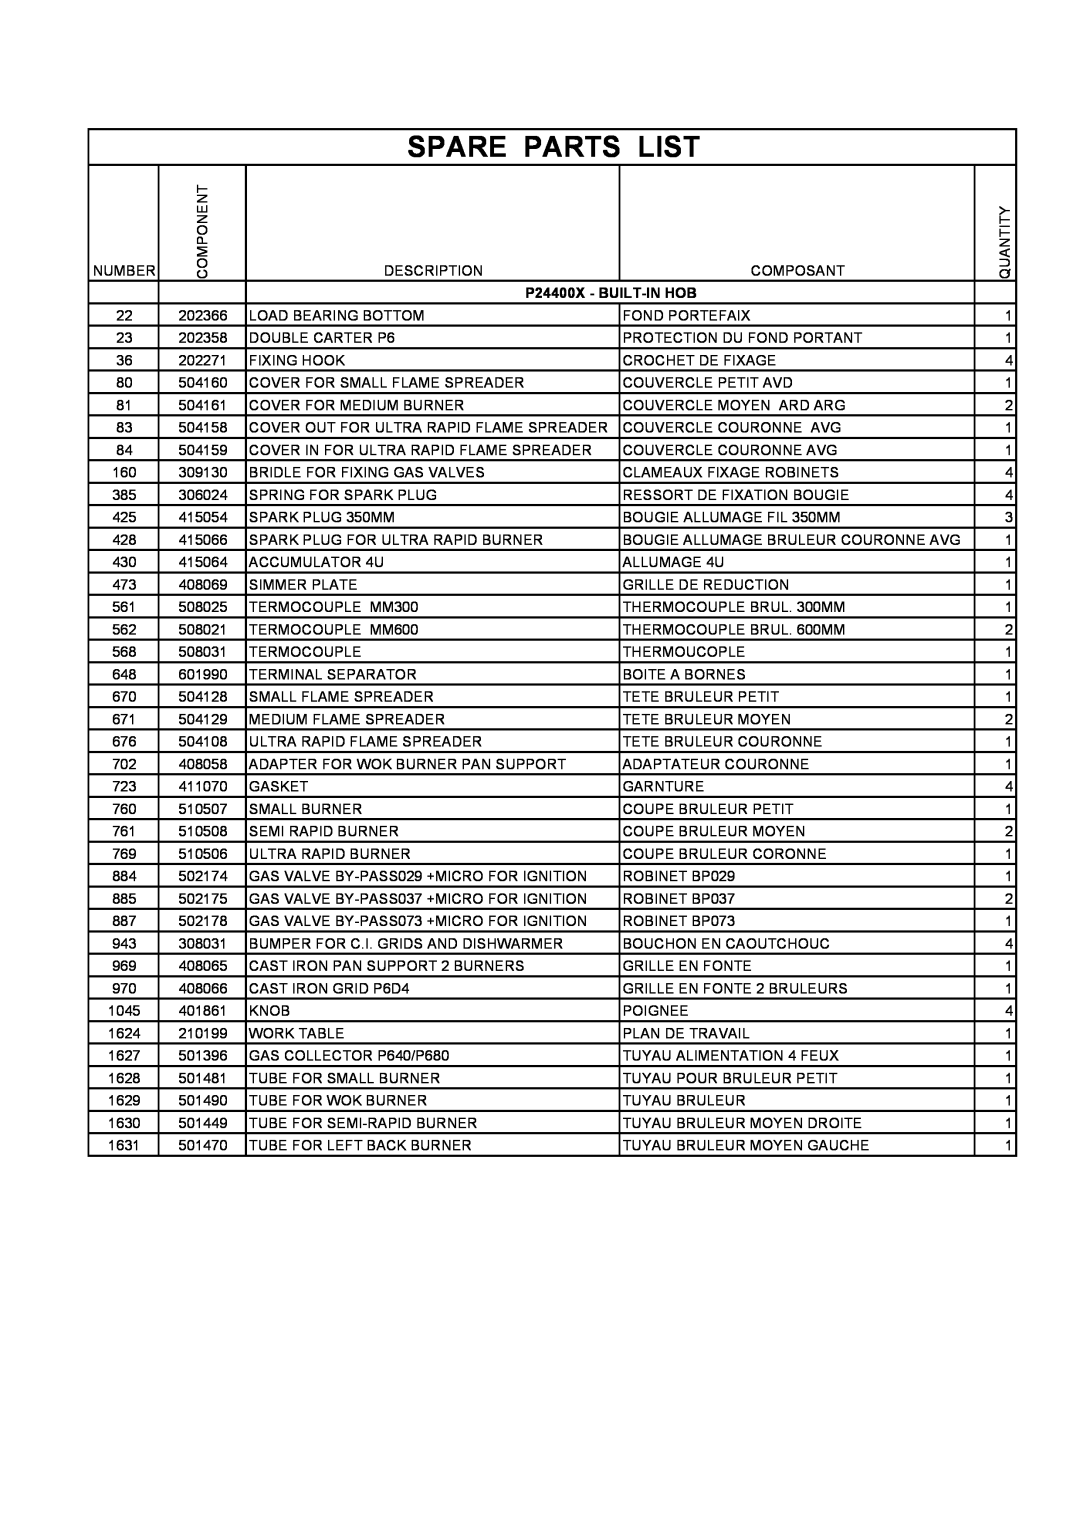 Bertazzoni manual Spare Parts List, P24400X - BUILT-IN HOB 